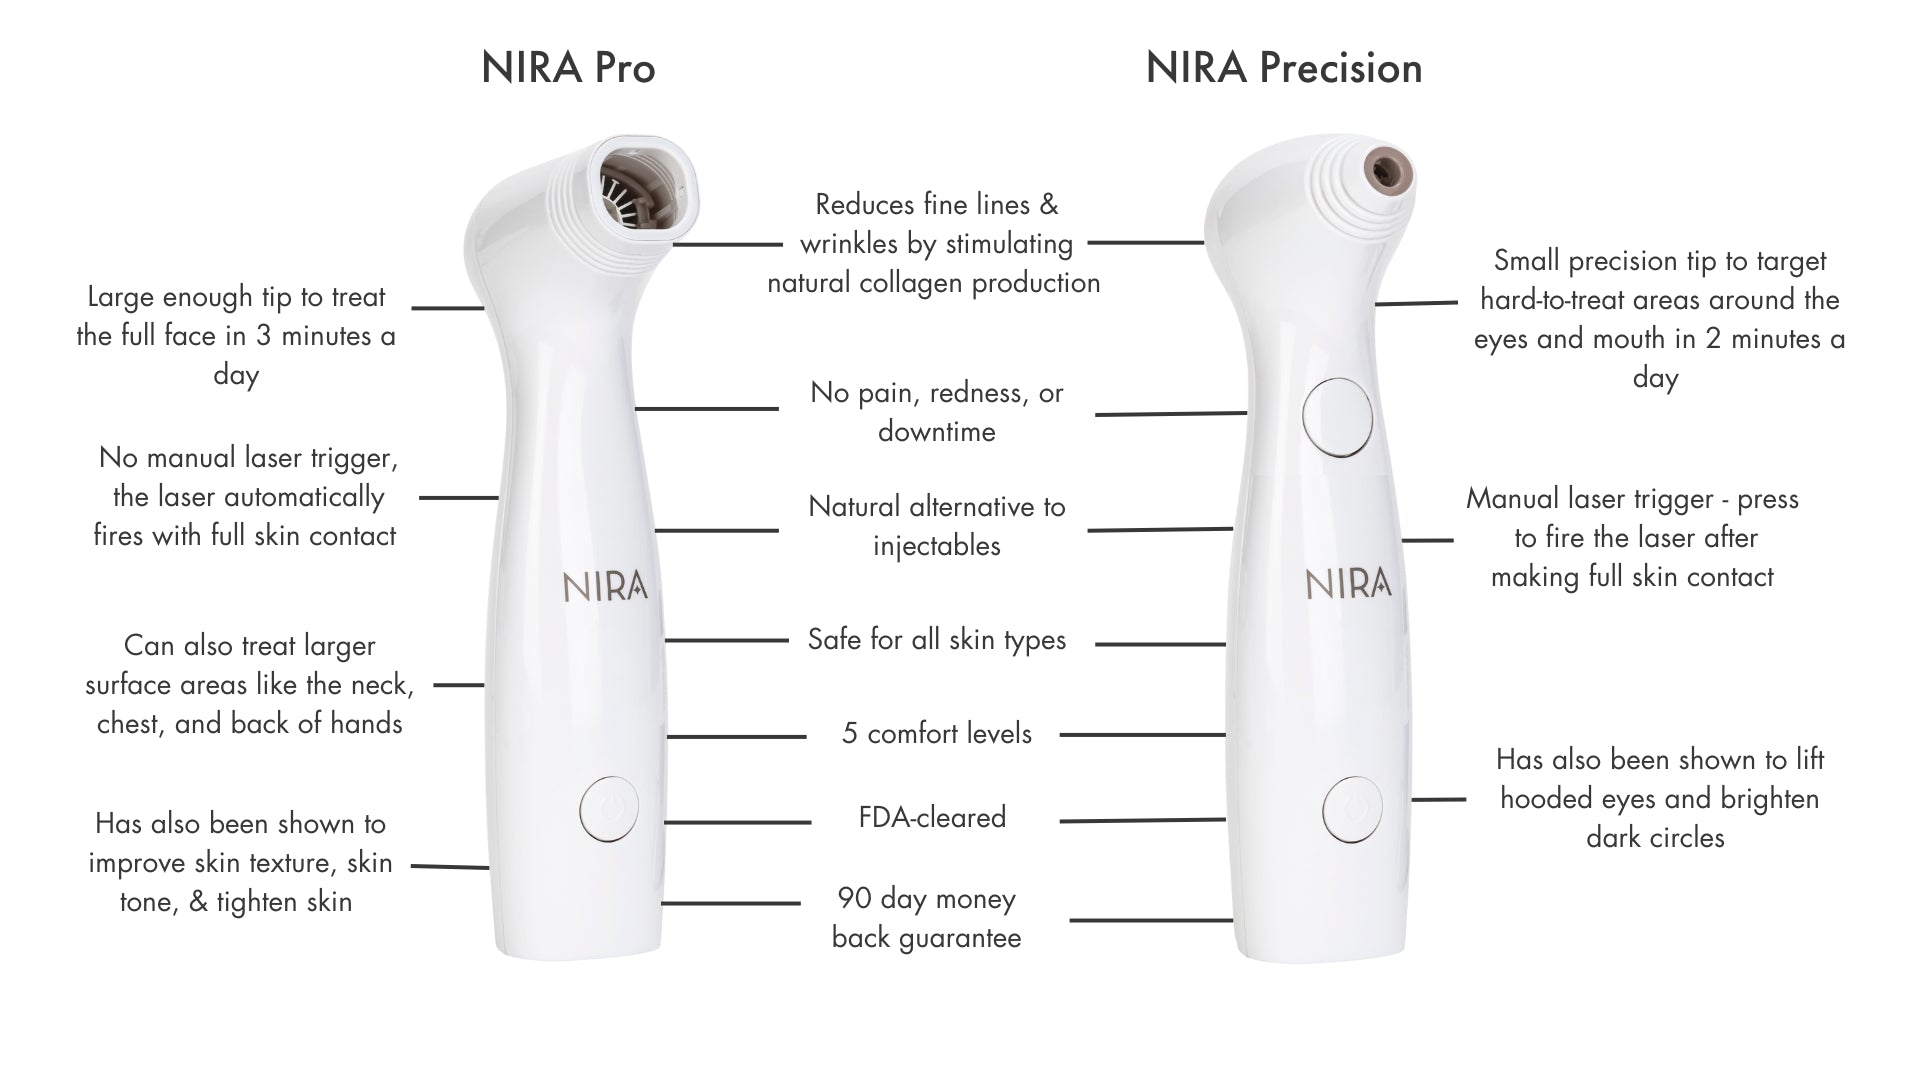 NIRA Precision Laser vs NIRA Pro Laser